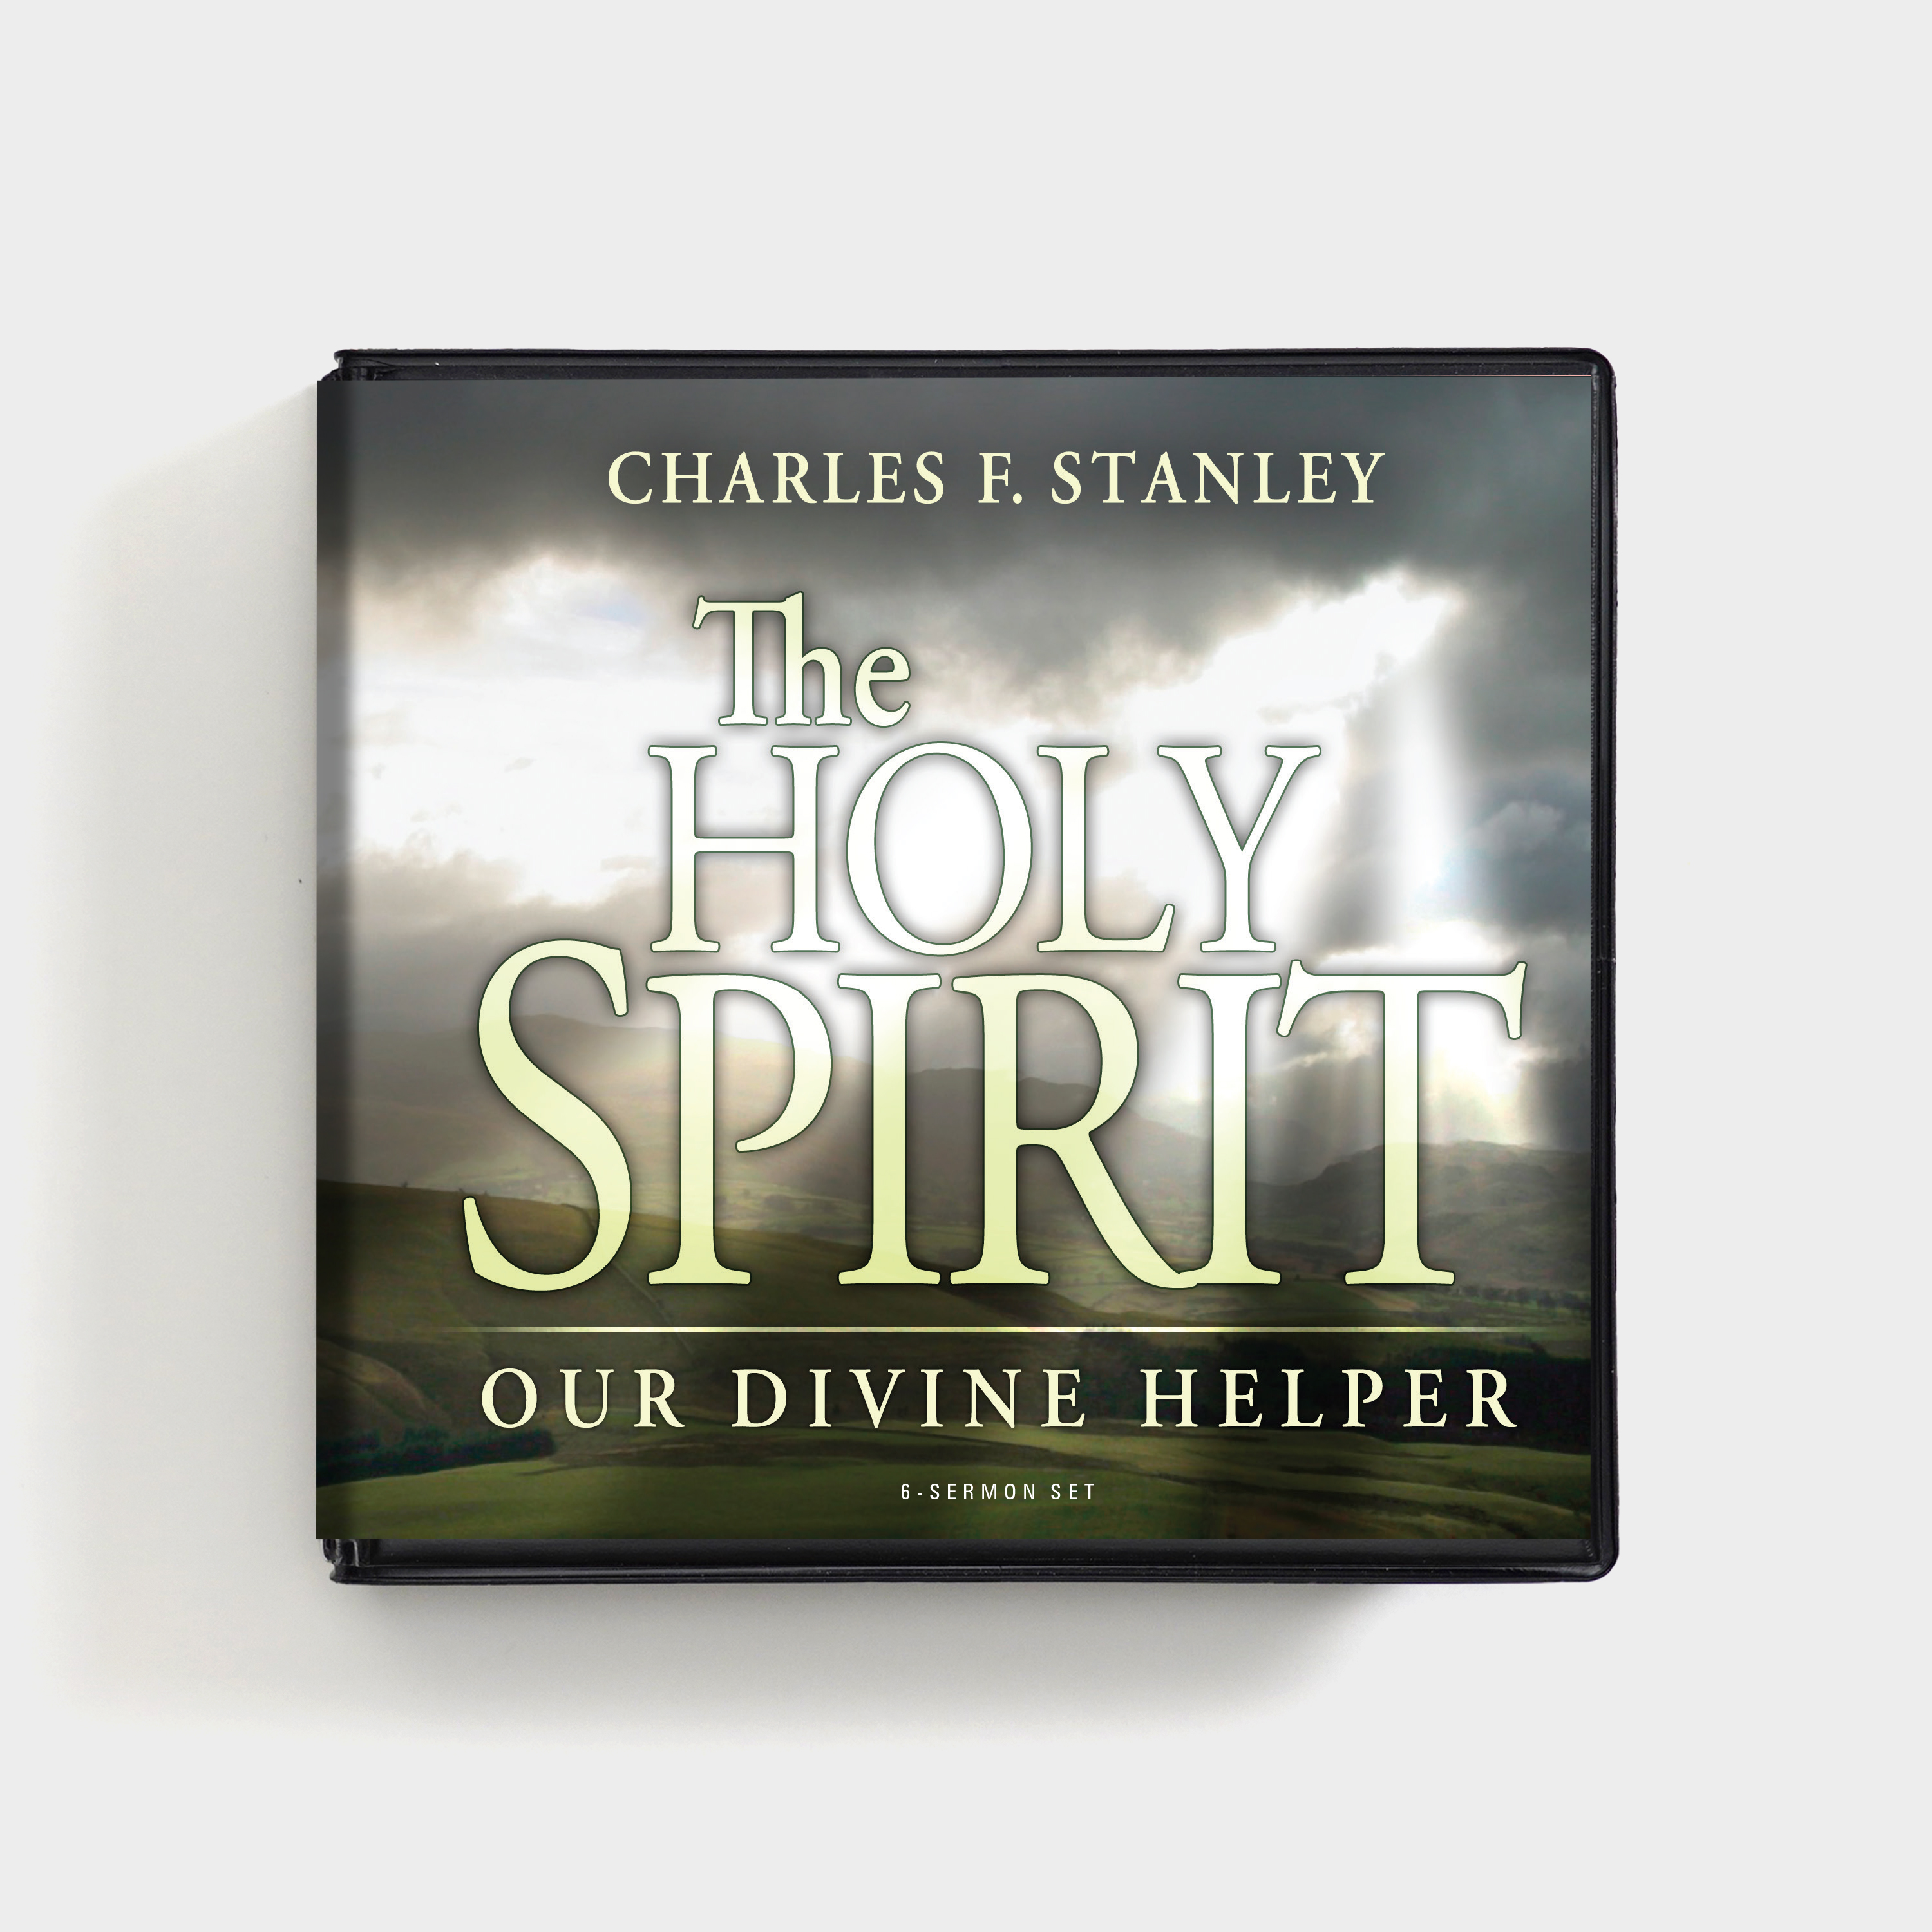 Our Divine Helper: The Holy Spirit